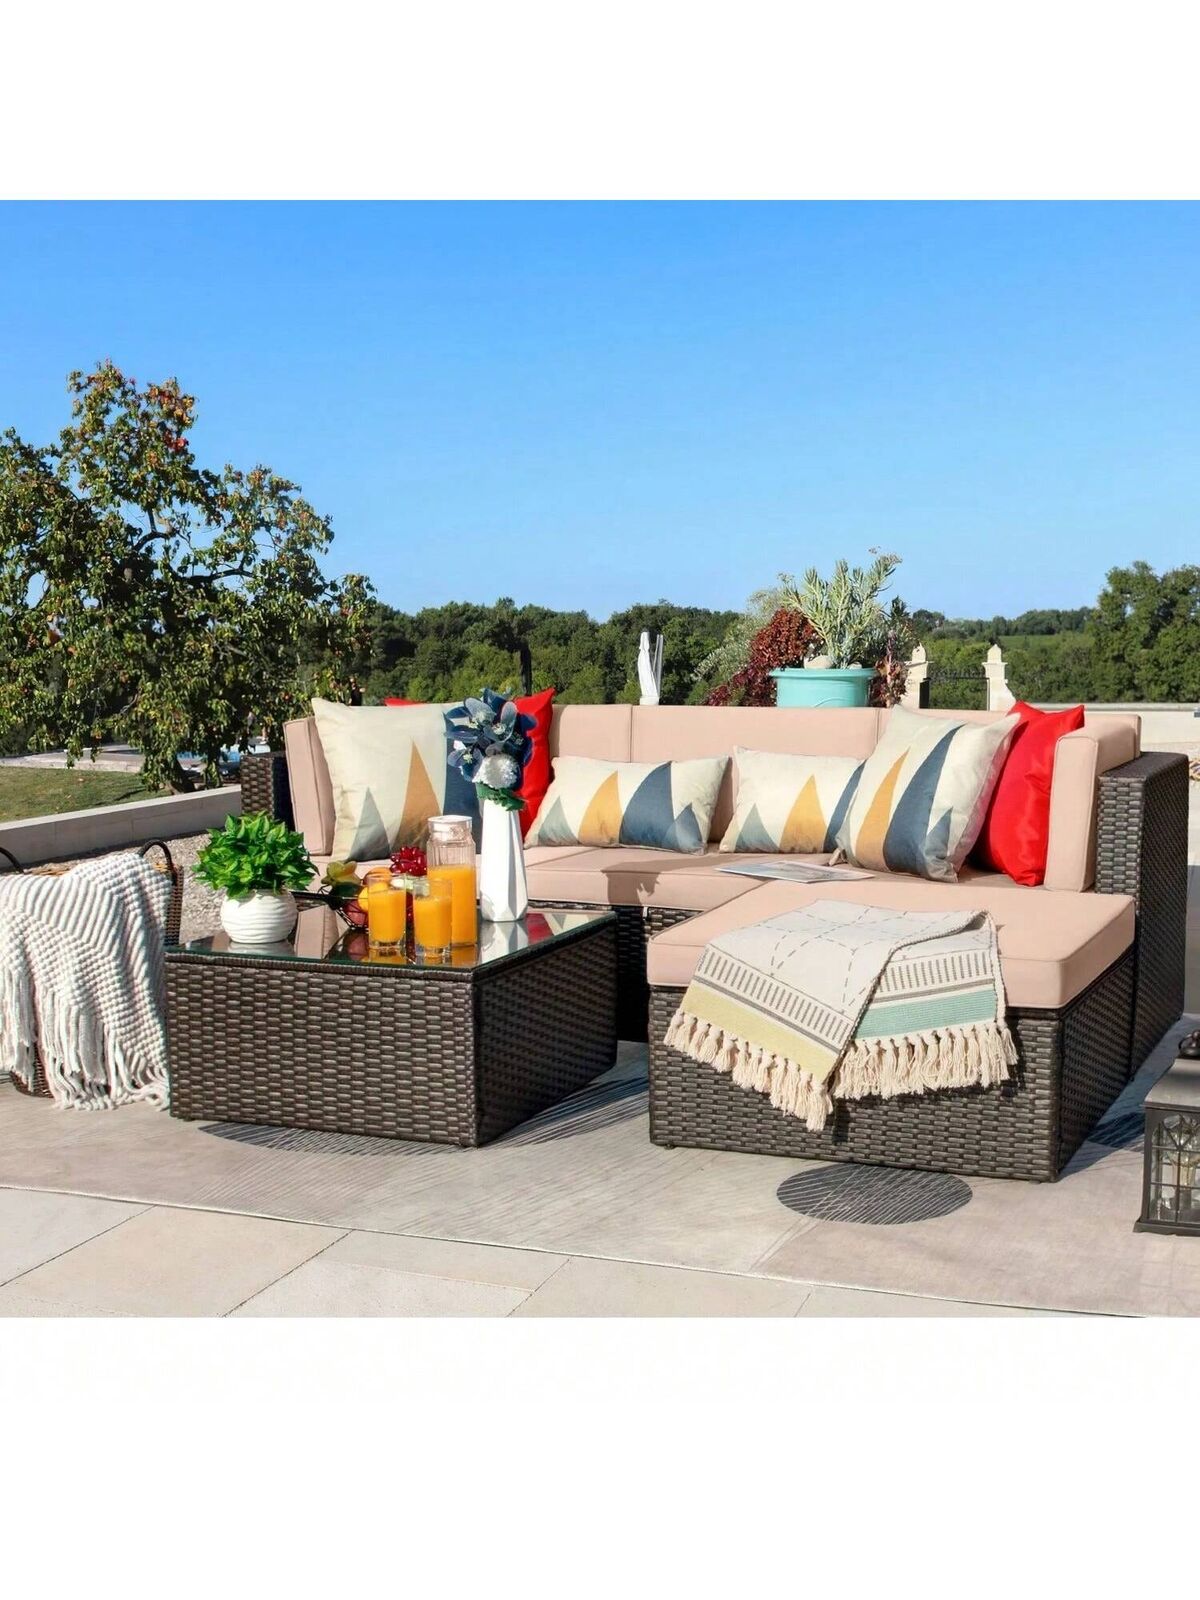 5 Pcs Patio Furniture Outdoor PE Rattan Wicker Lawn Conversation Cushioned Set